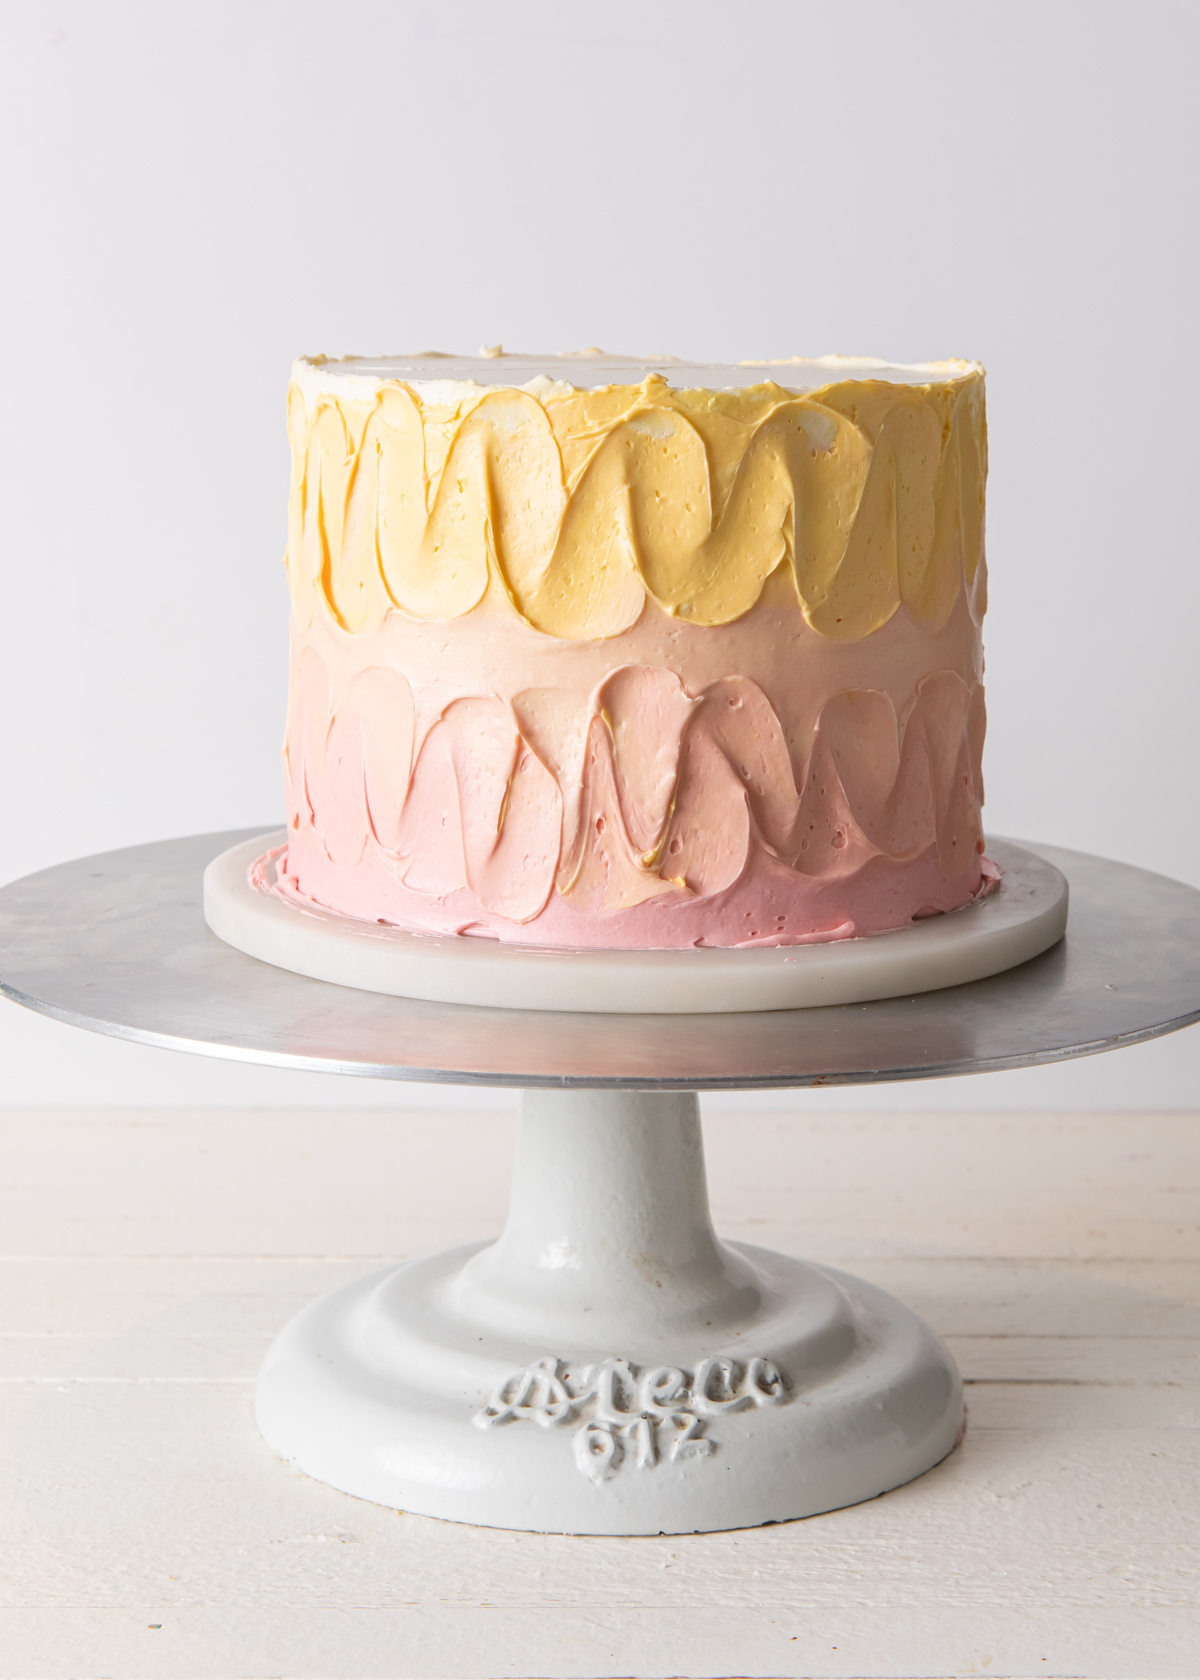 Blending the buttercream on an ombre cake